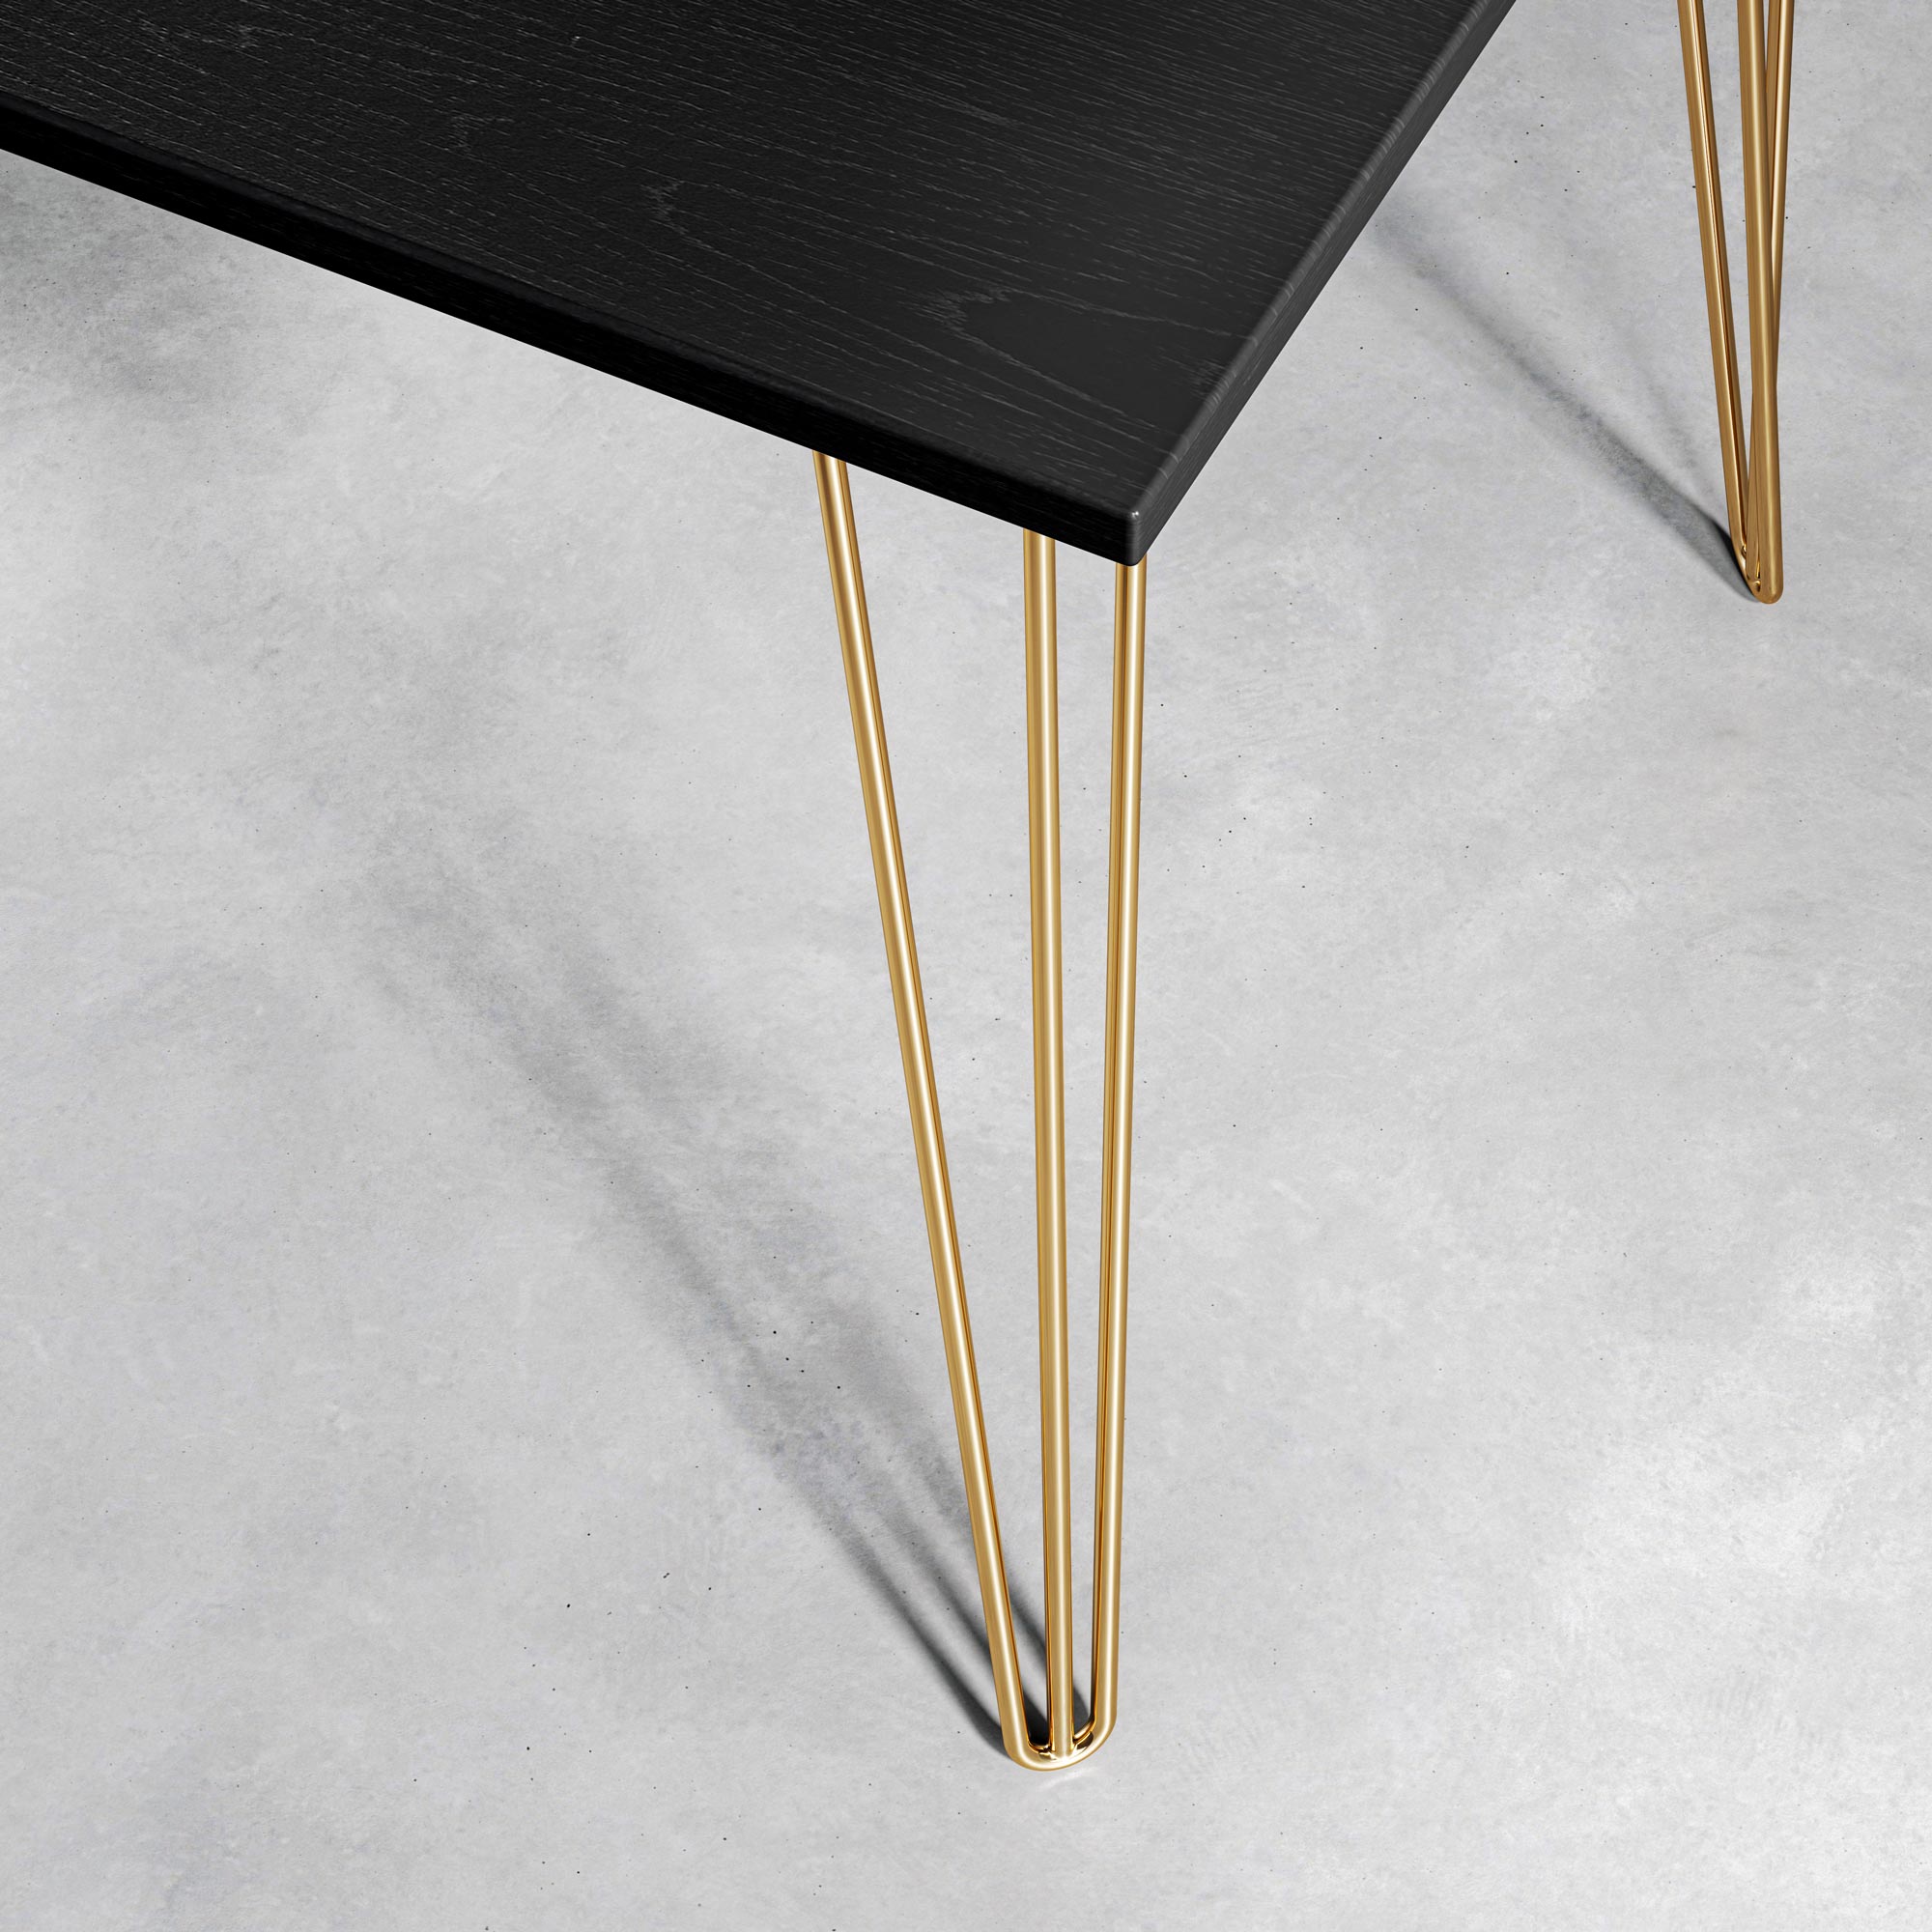 Black Ash Hairpin Table-Small (60cm x 120cm)-Gold-The Hairpin Leg Co.